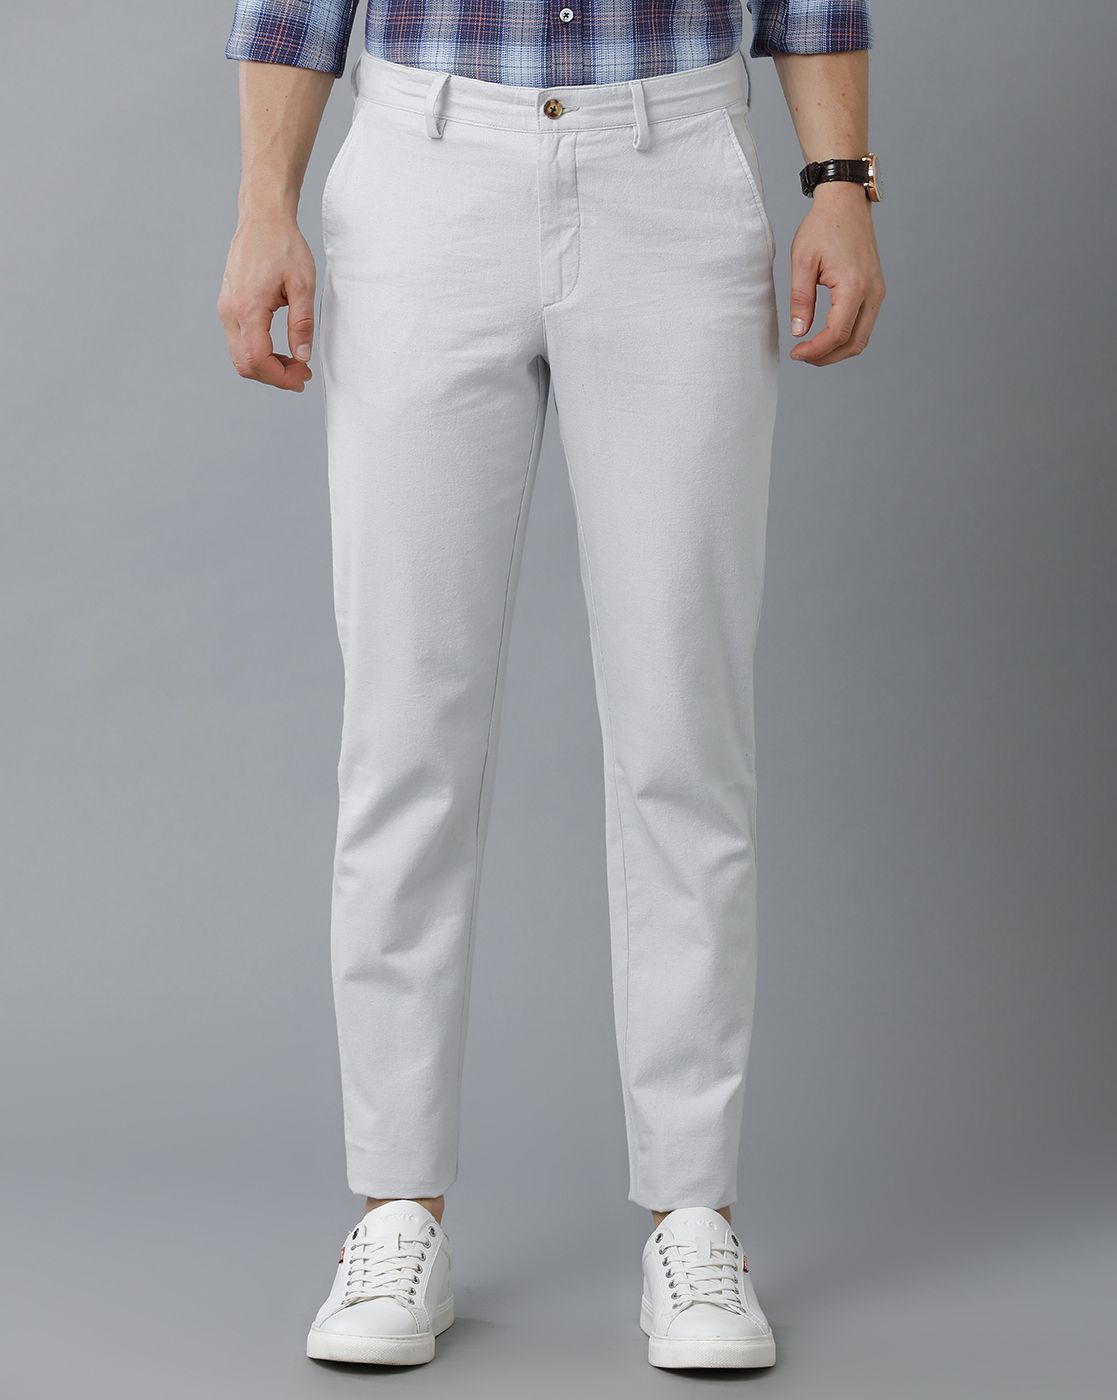 Buy Cream Trousers  Pants for Men by NETWORK Online  Ajiocom